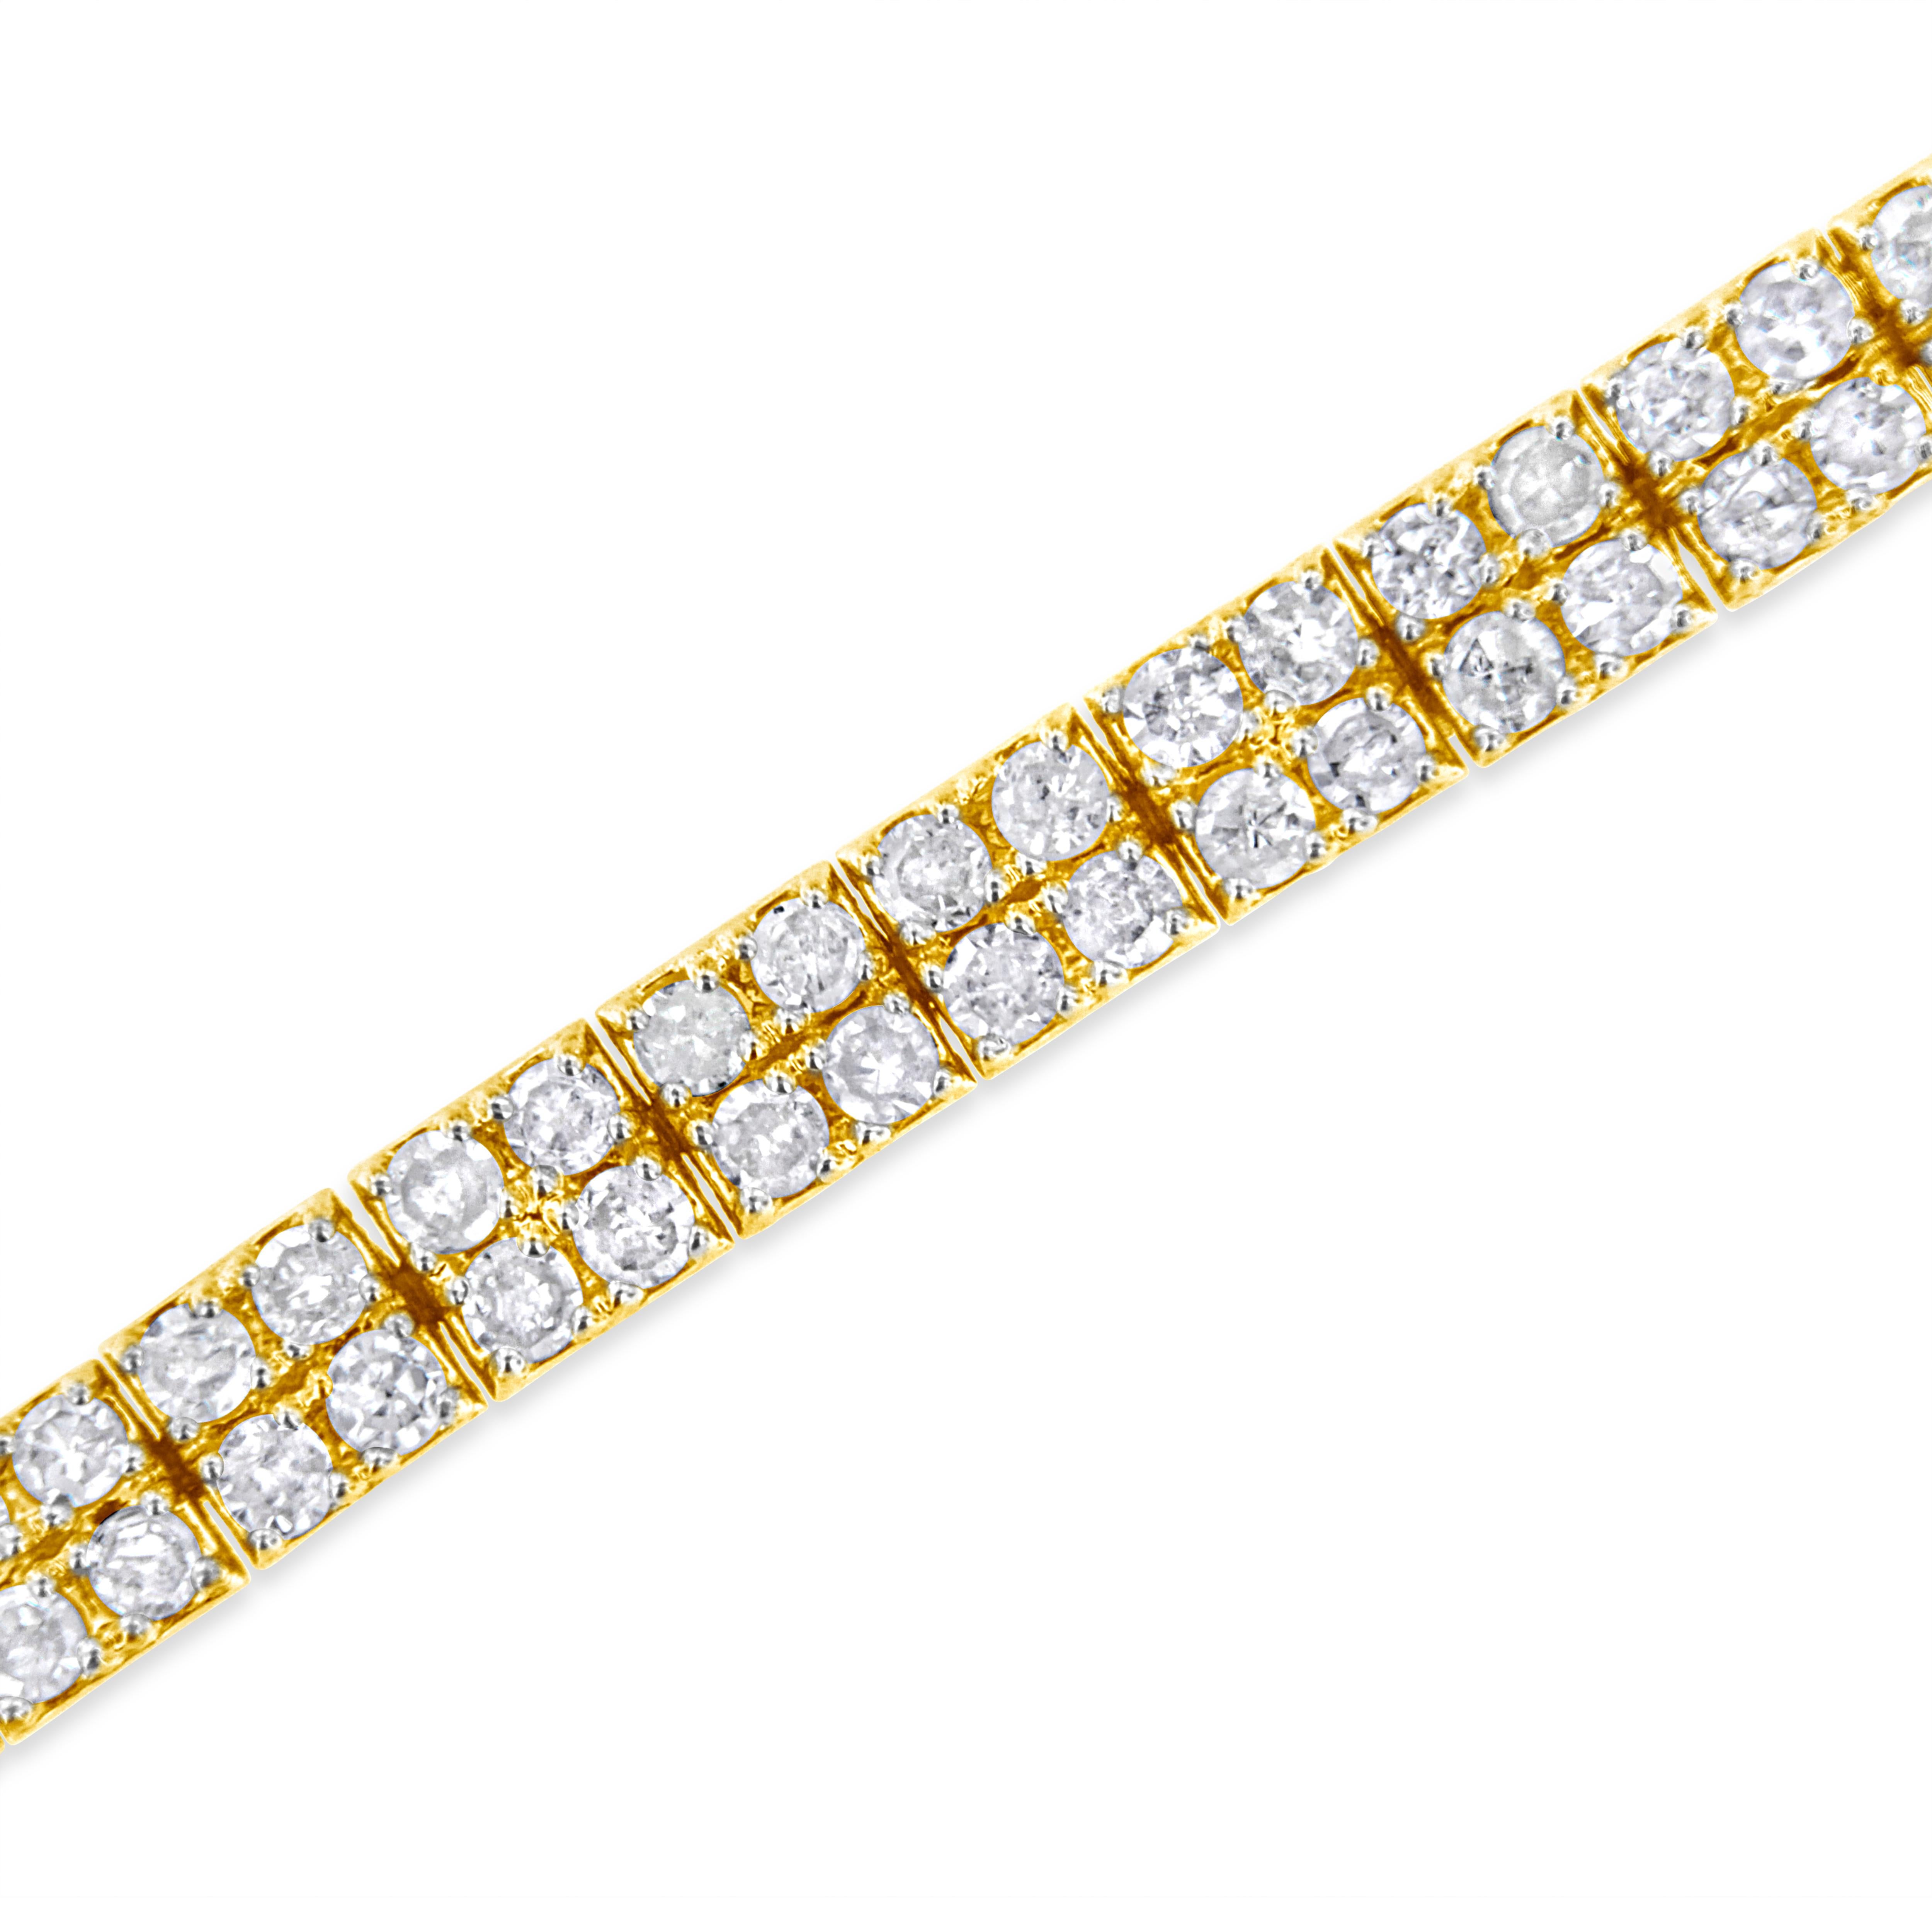 1.0 carat tw diamond bracelet with 14k gold plating over sterling silver